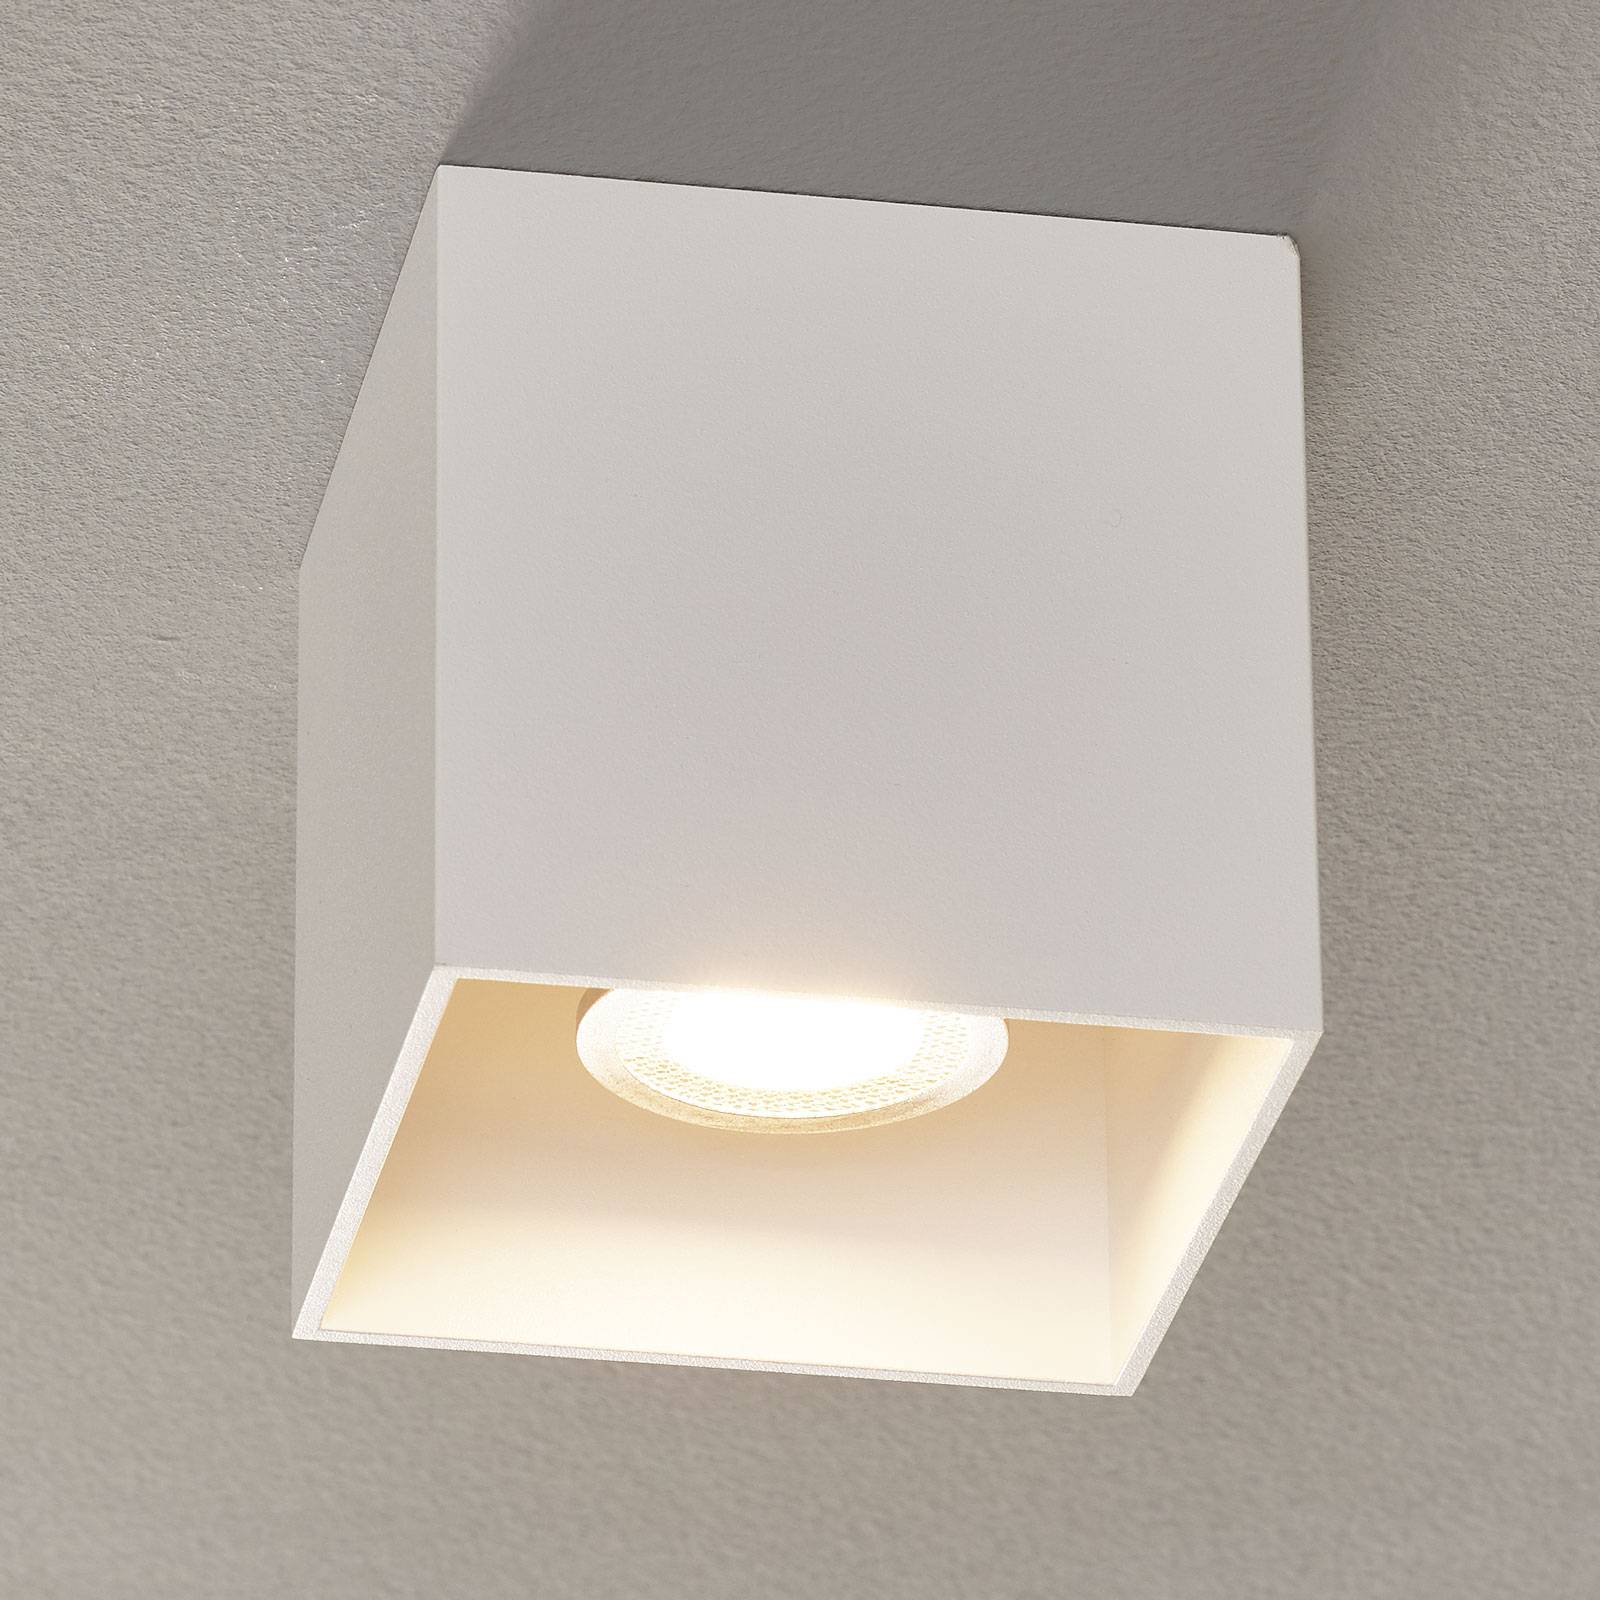 Wever & Ducré Lighting WEVER & DUCRÉ Box 1.0 PAR16 stropní svítidlo bílé barvy